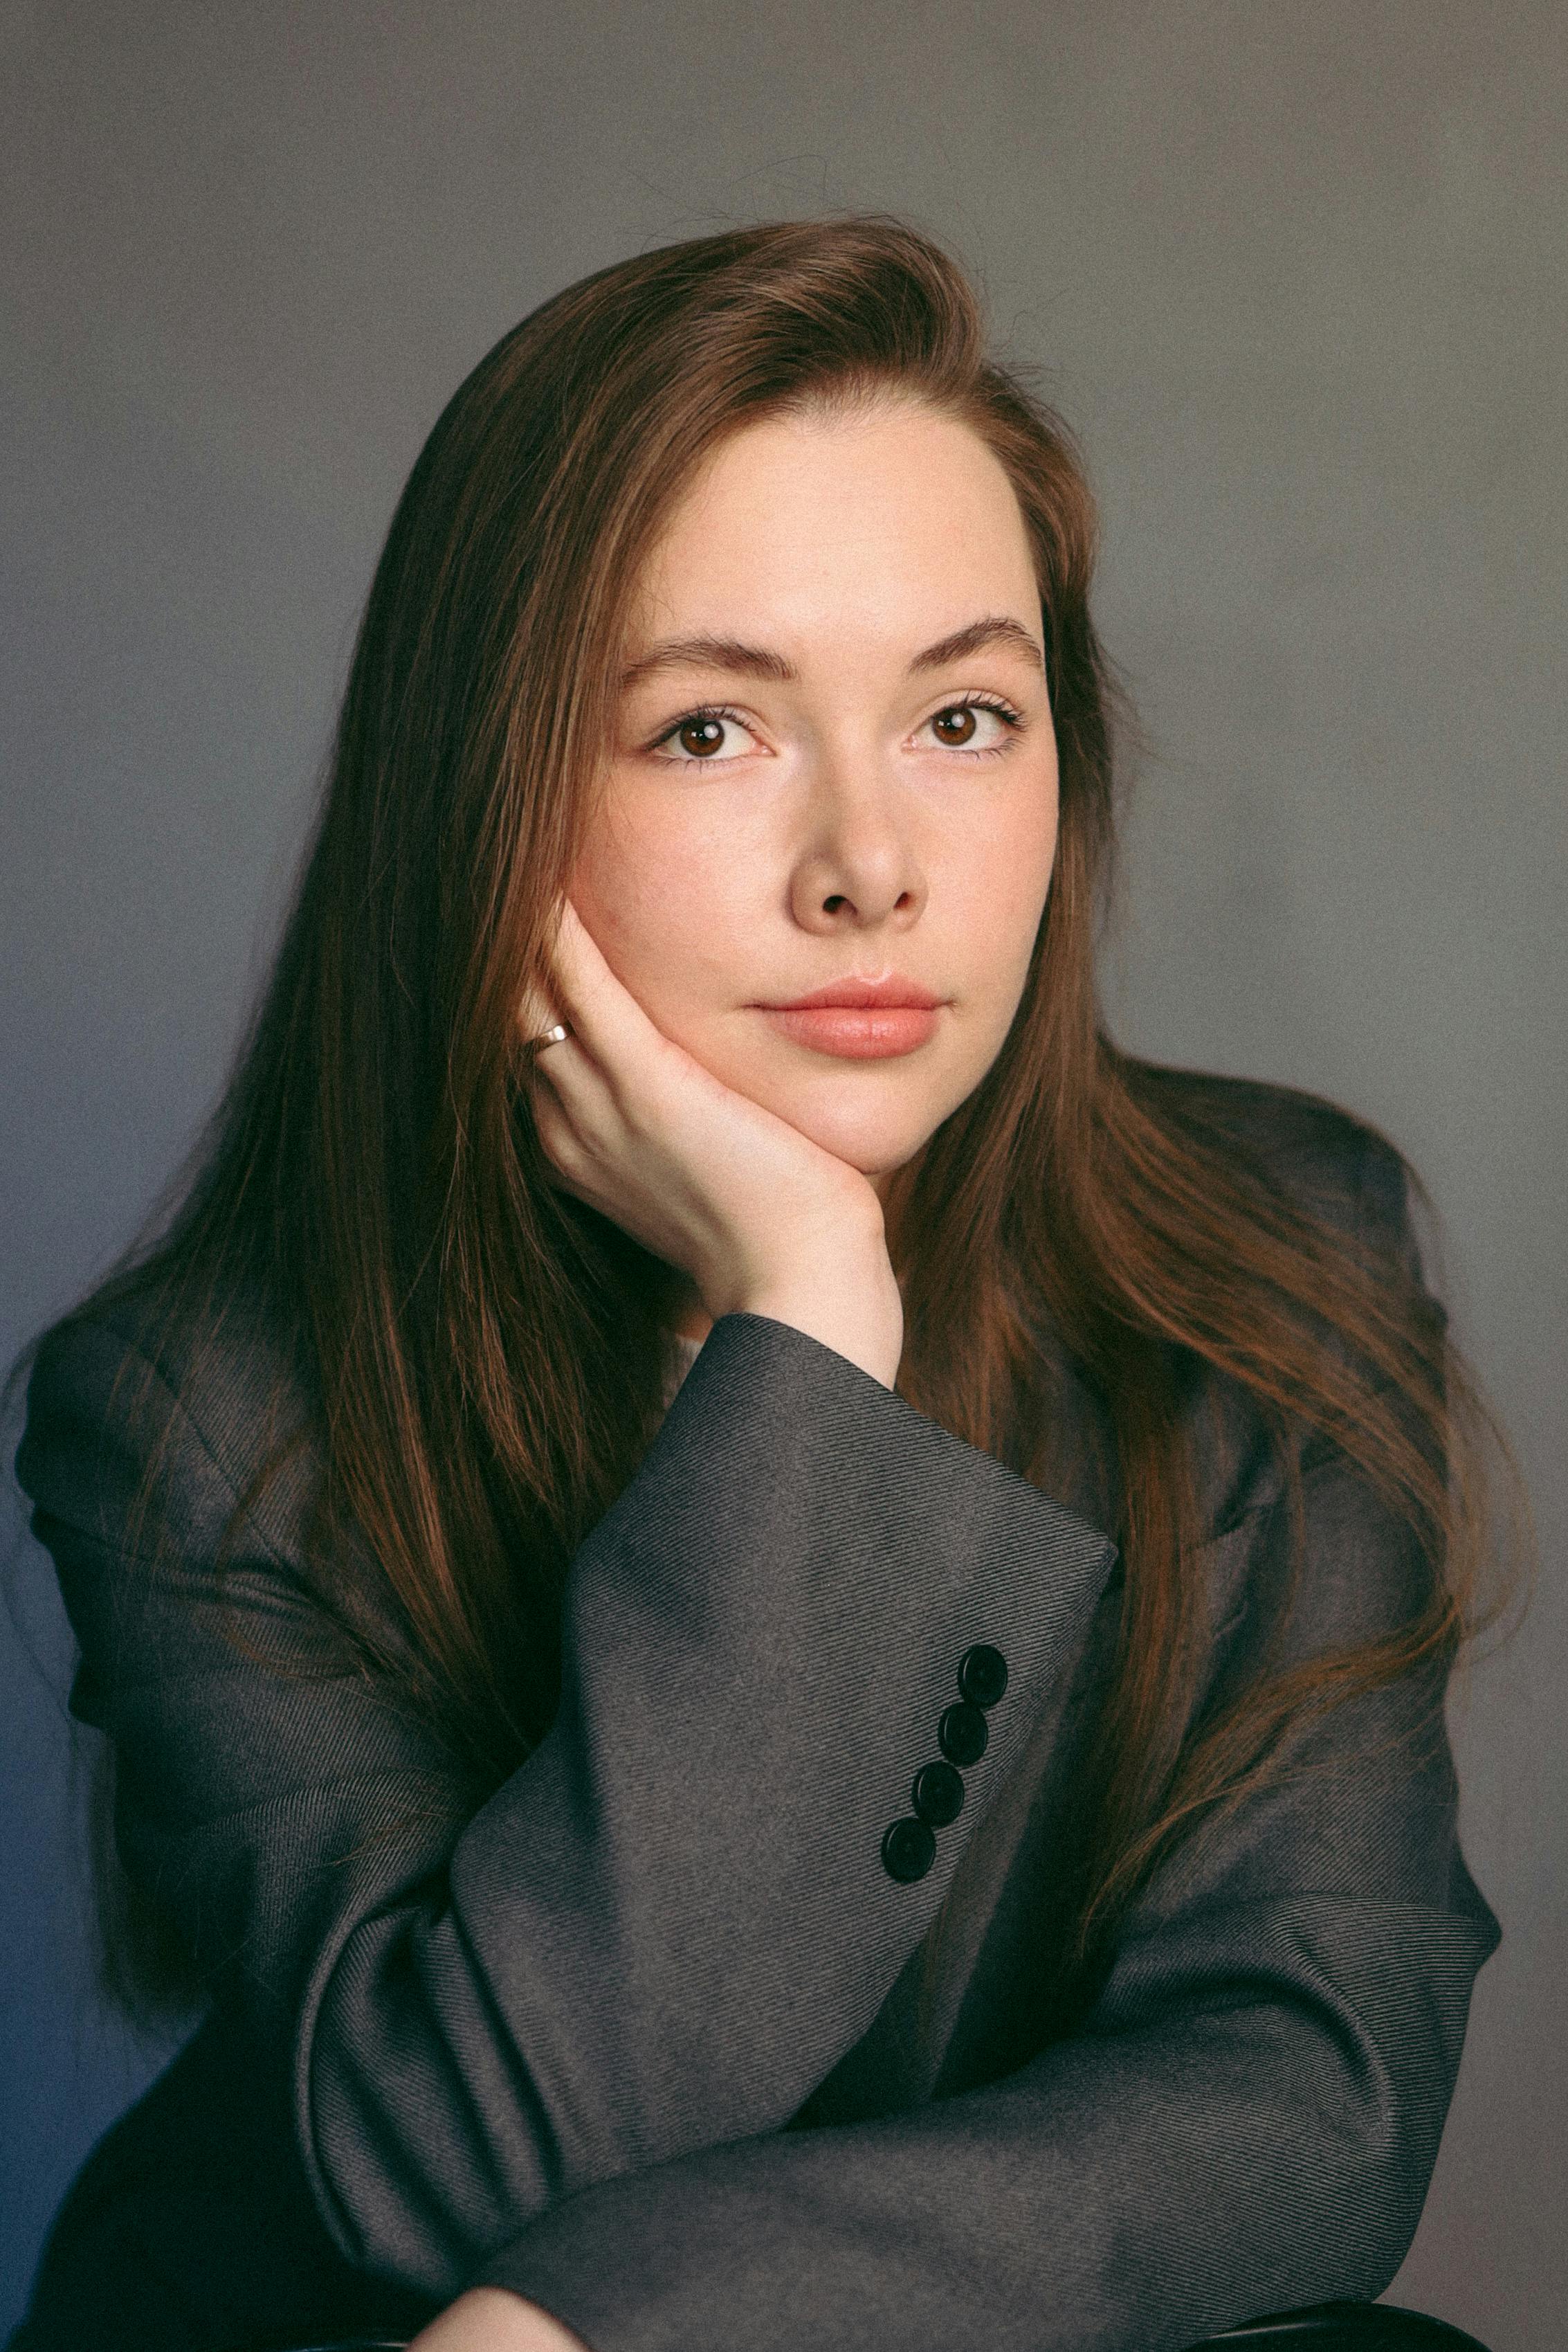 A young woman posing for a studio portrait | Source: Pexels